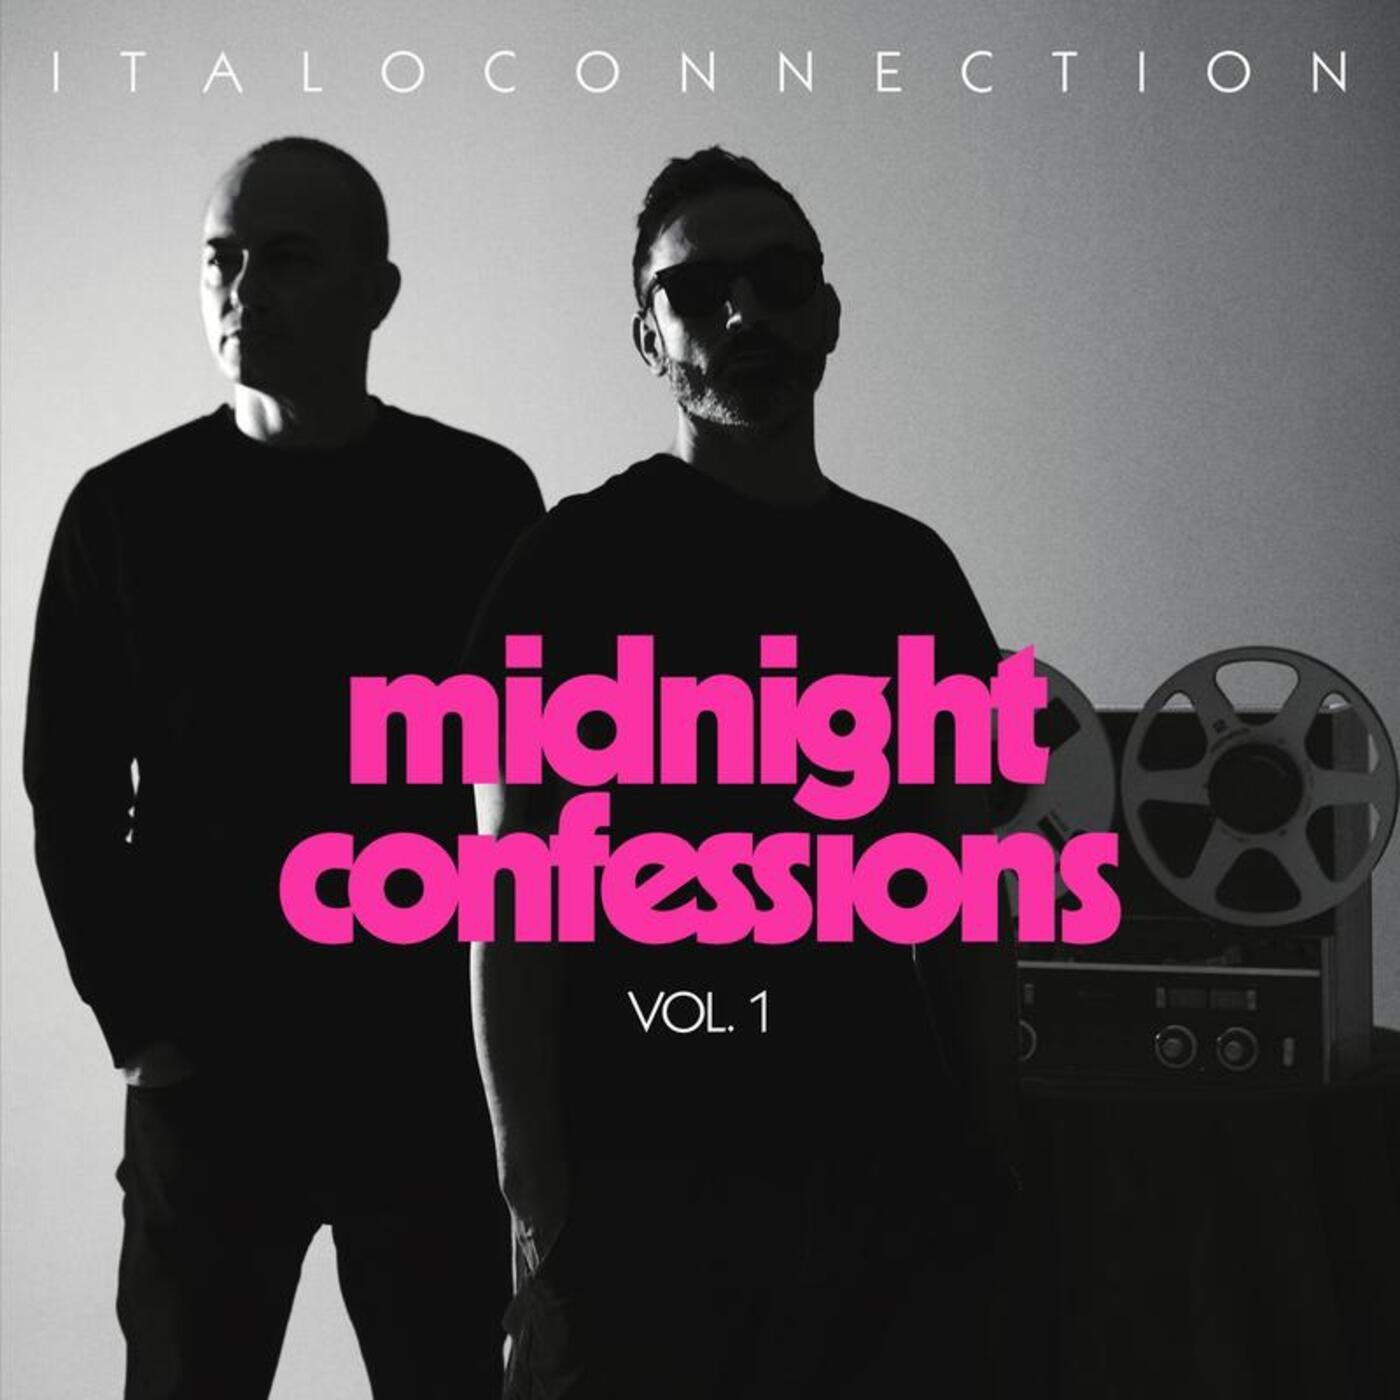 Italoconnection – Midnight Confessions Vol. 1